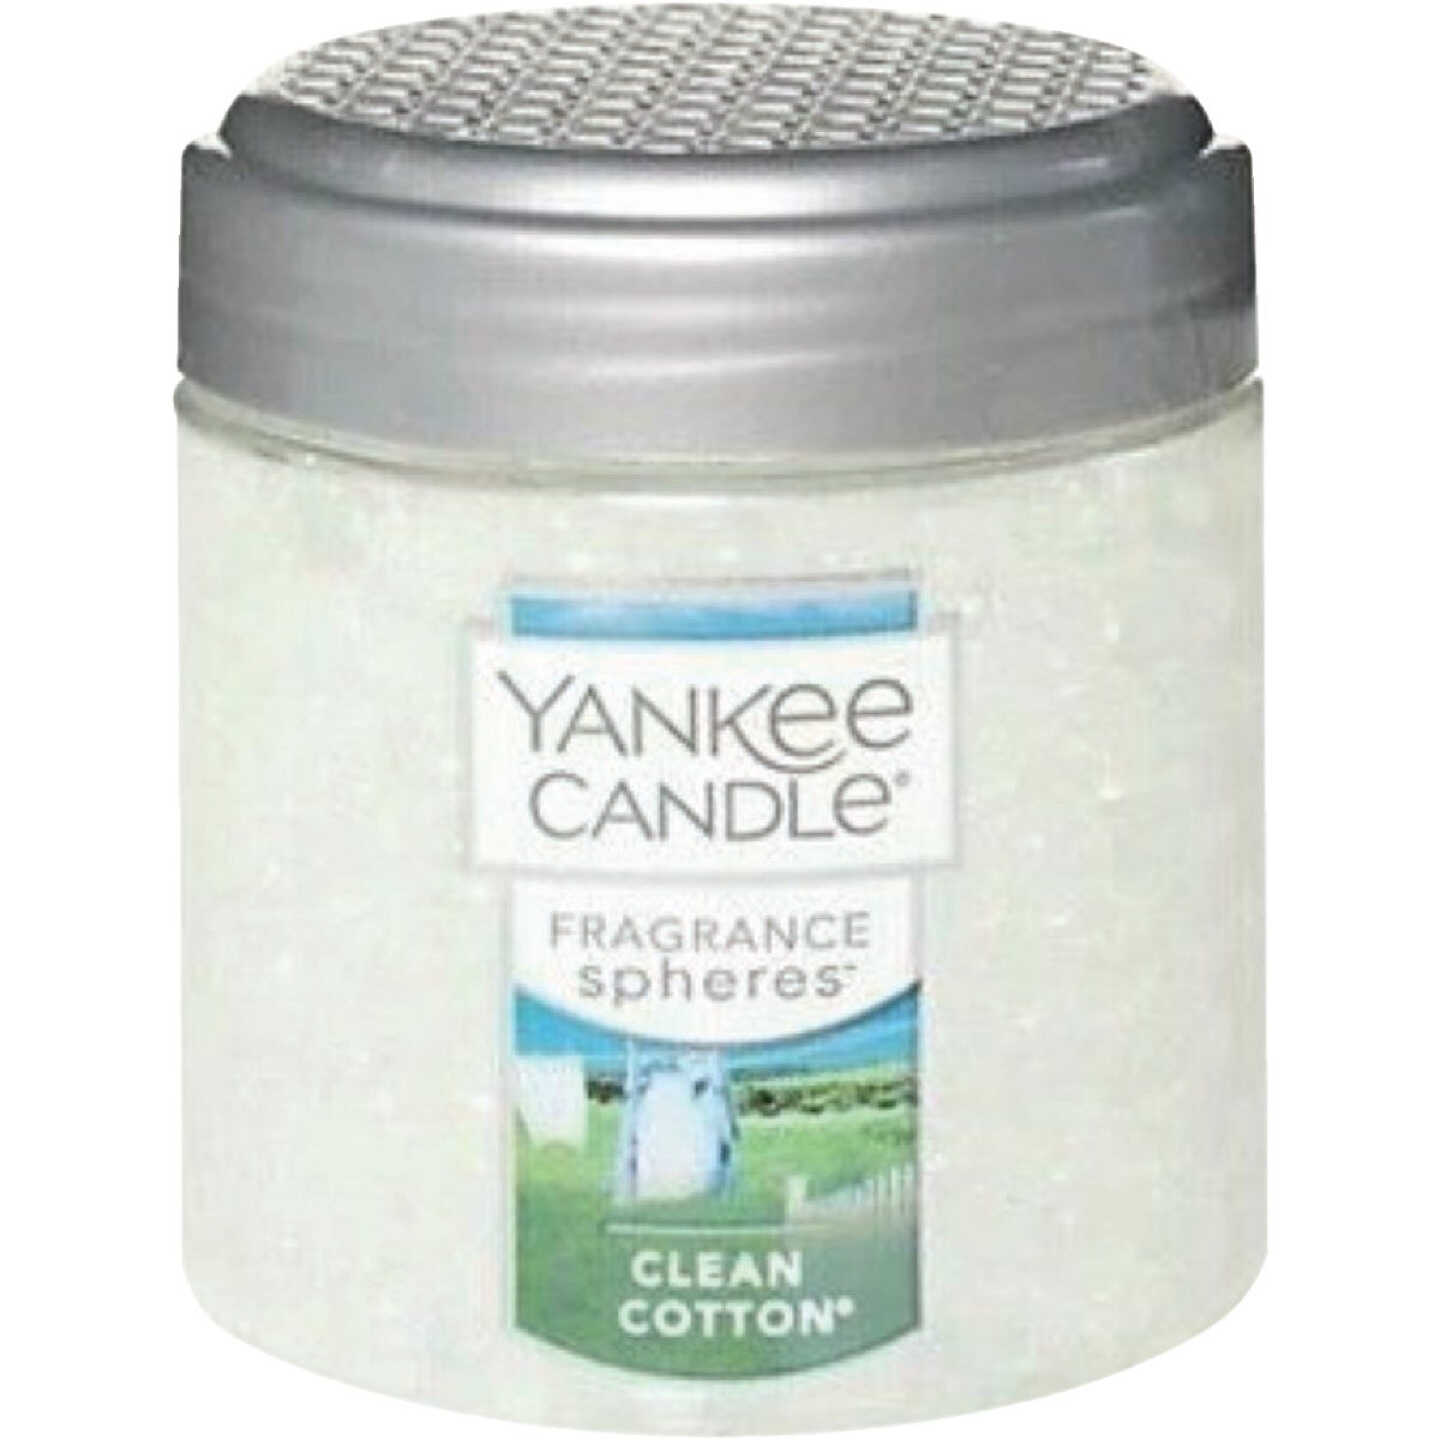 Yankee Candle Fragrance Spheres 6 Oz. Clean Cotton Odor Neutralizer -  Ambridge Home Center